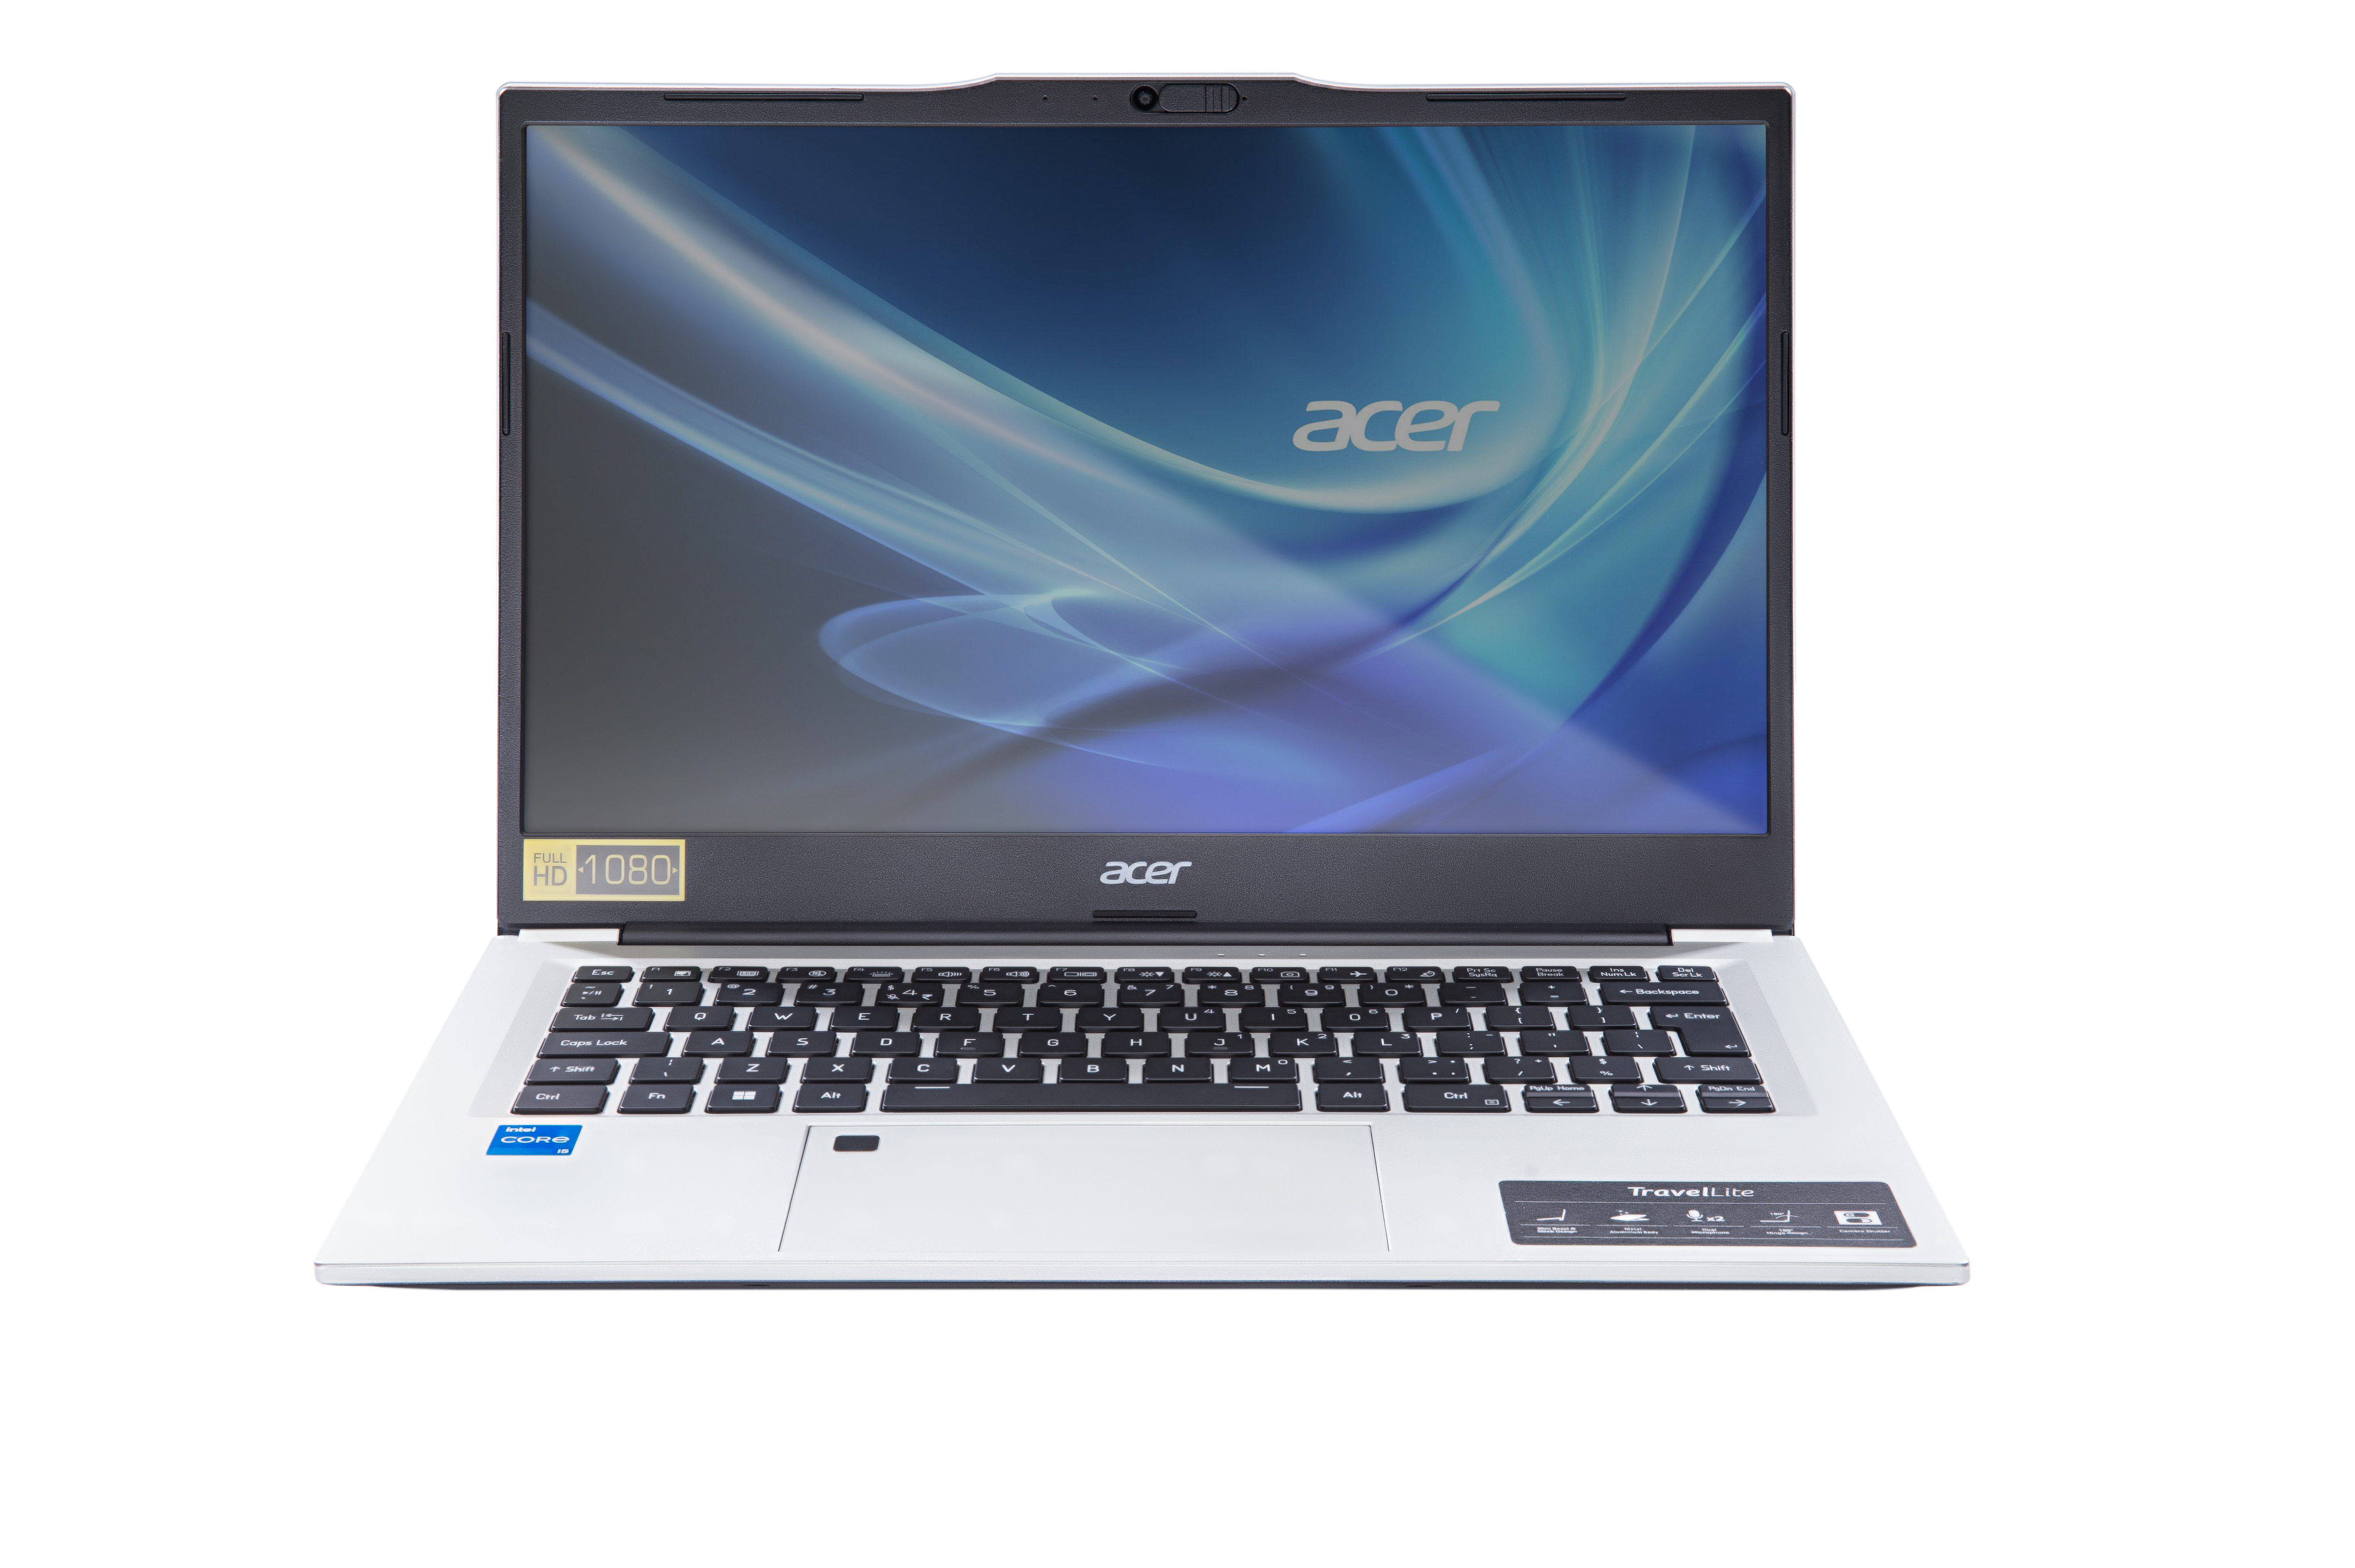 Acer Unveils TravelLite Laptops